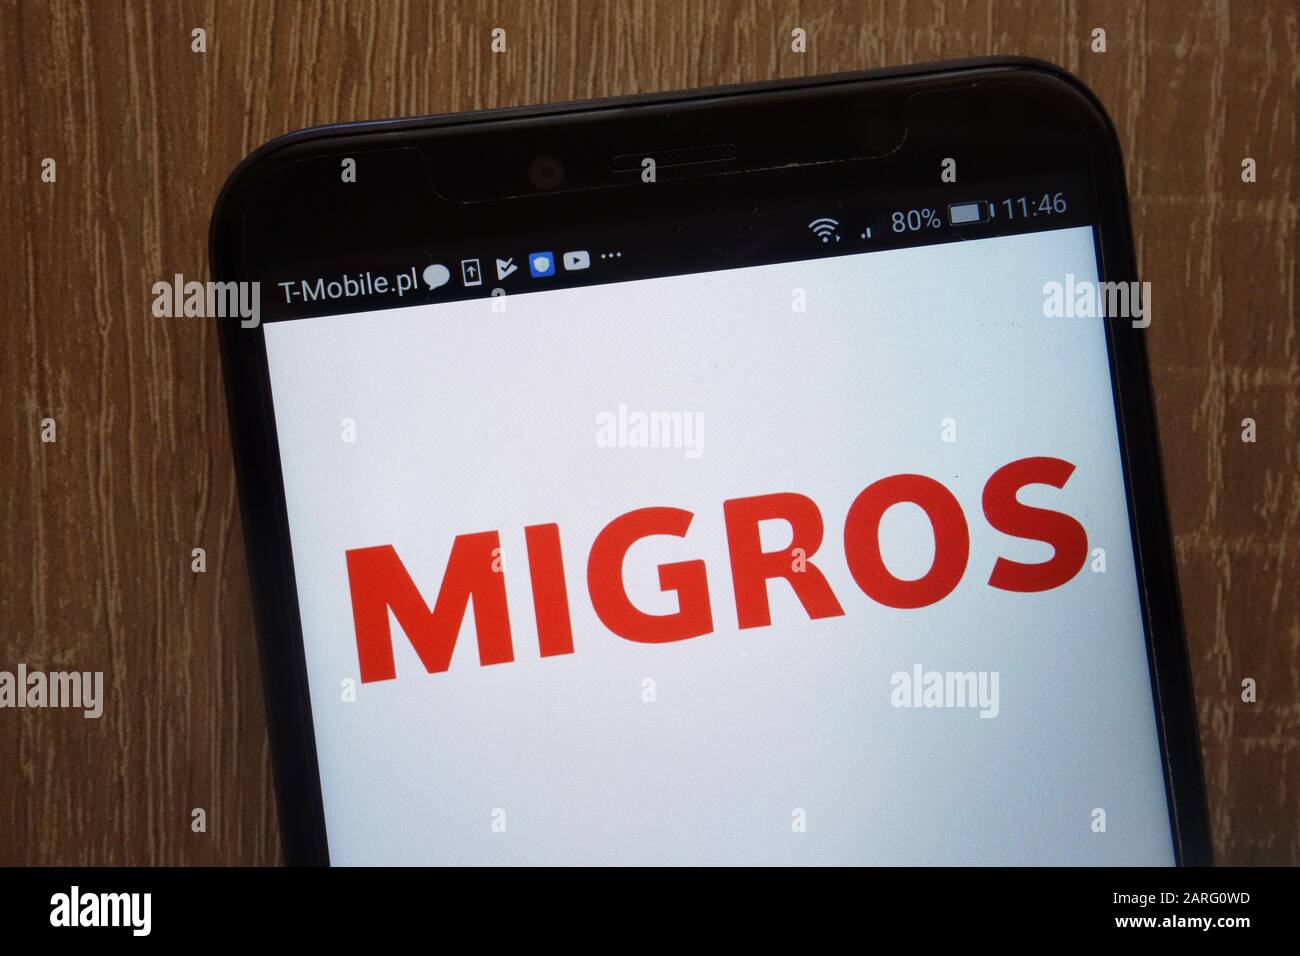 Migros logo displayed on a modern smartphone Stock Photo